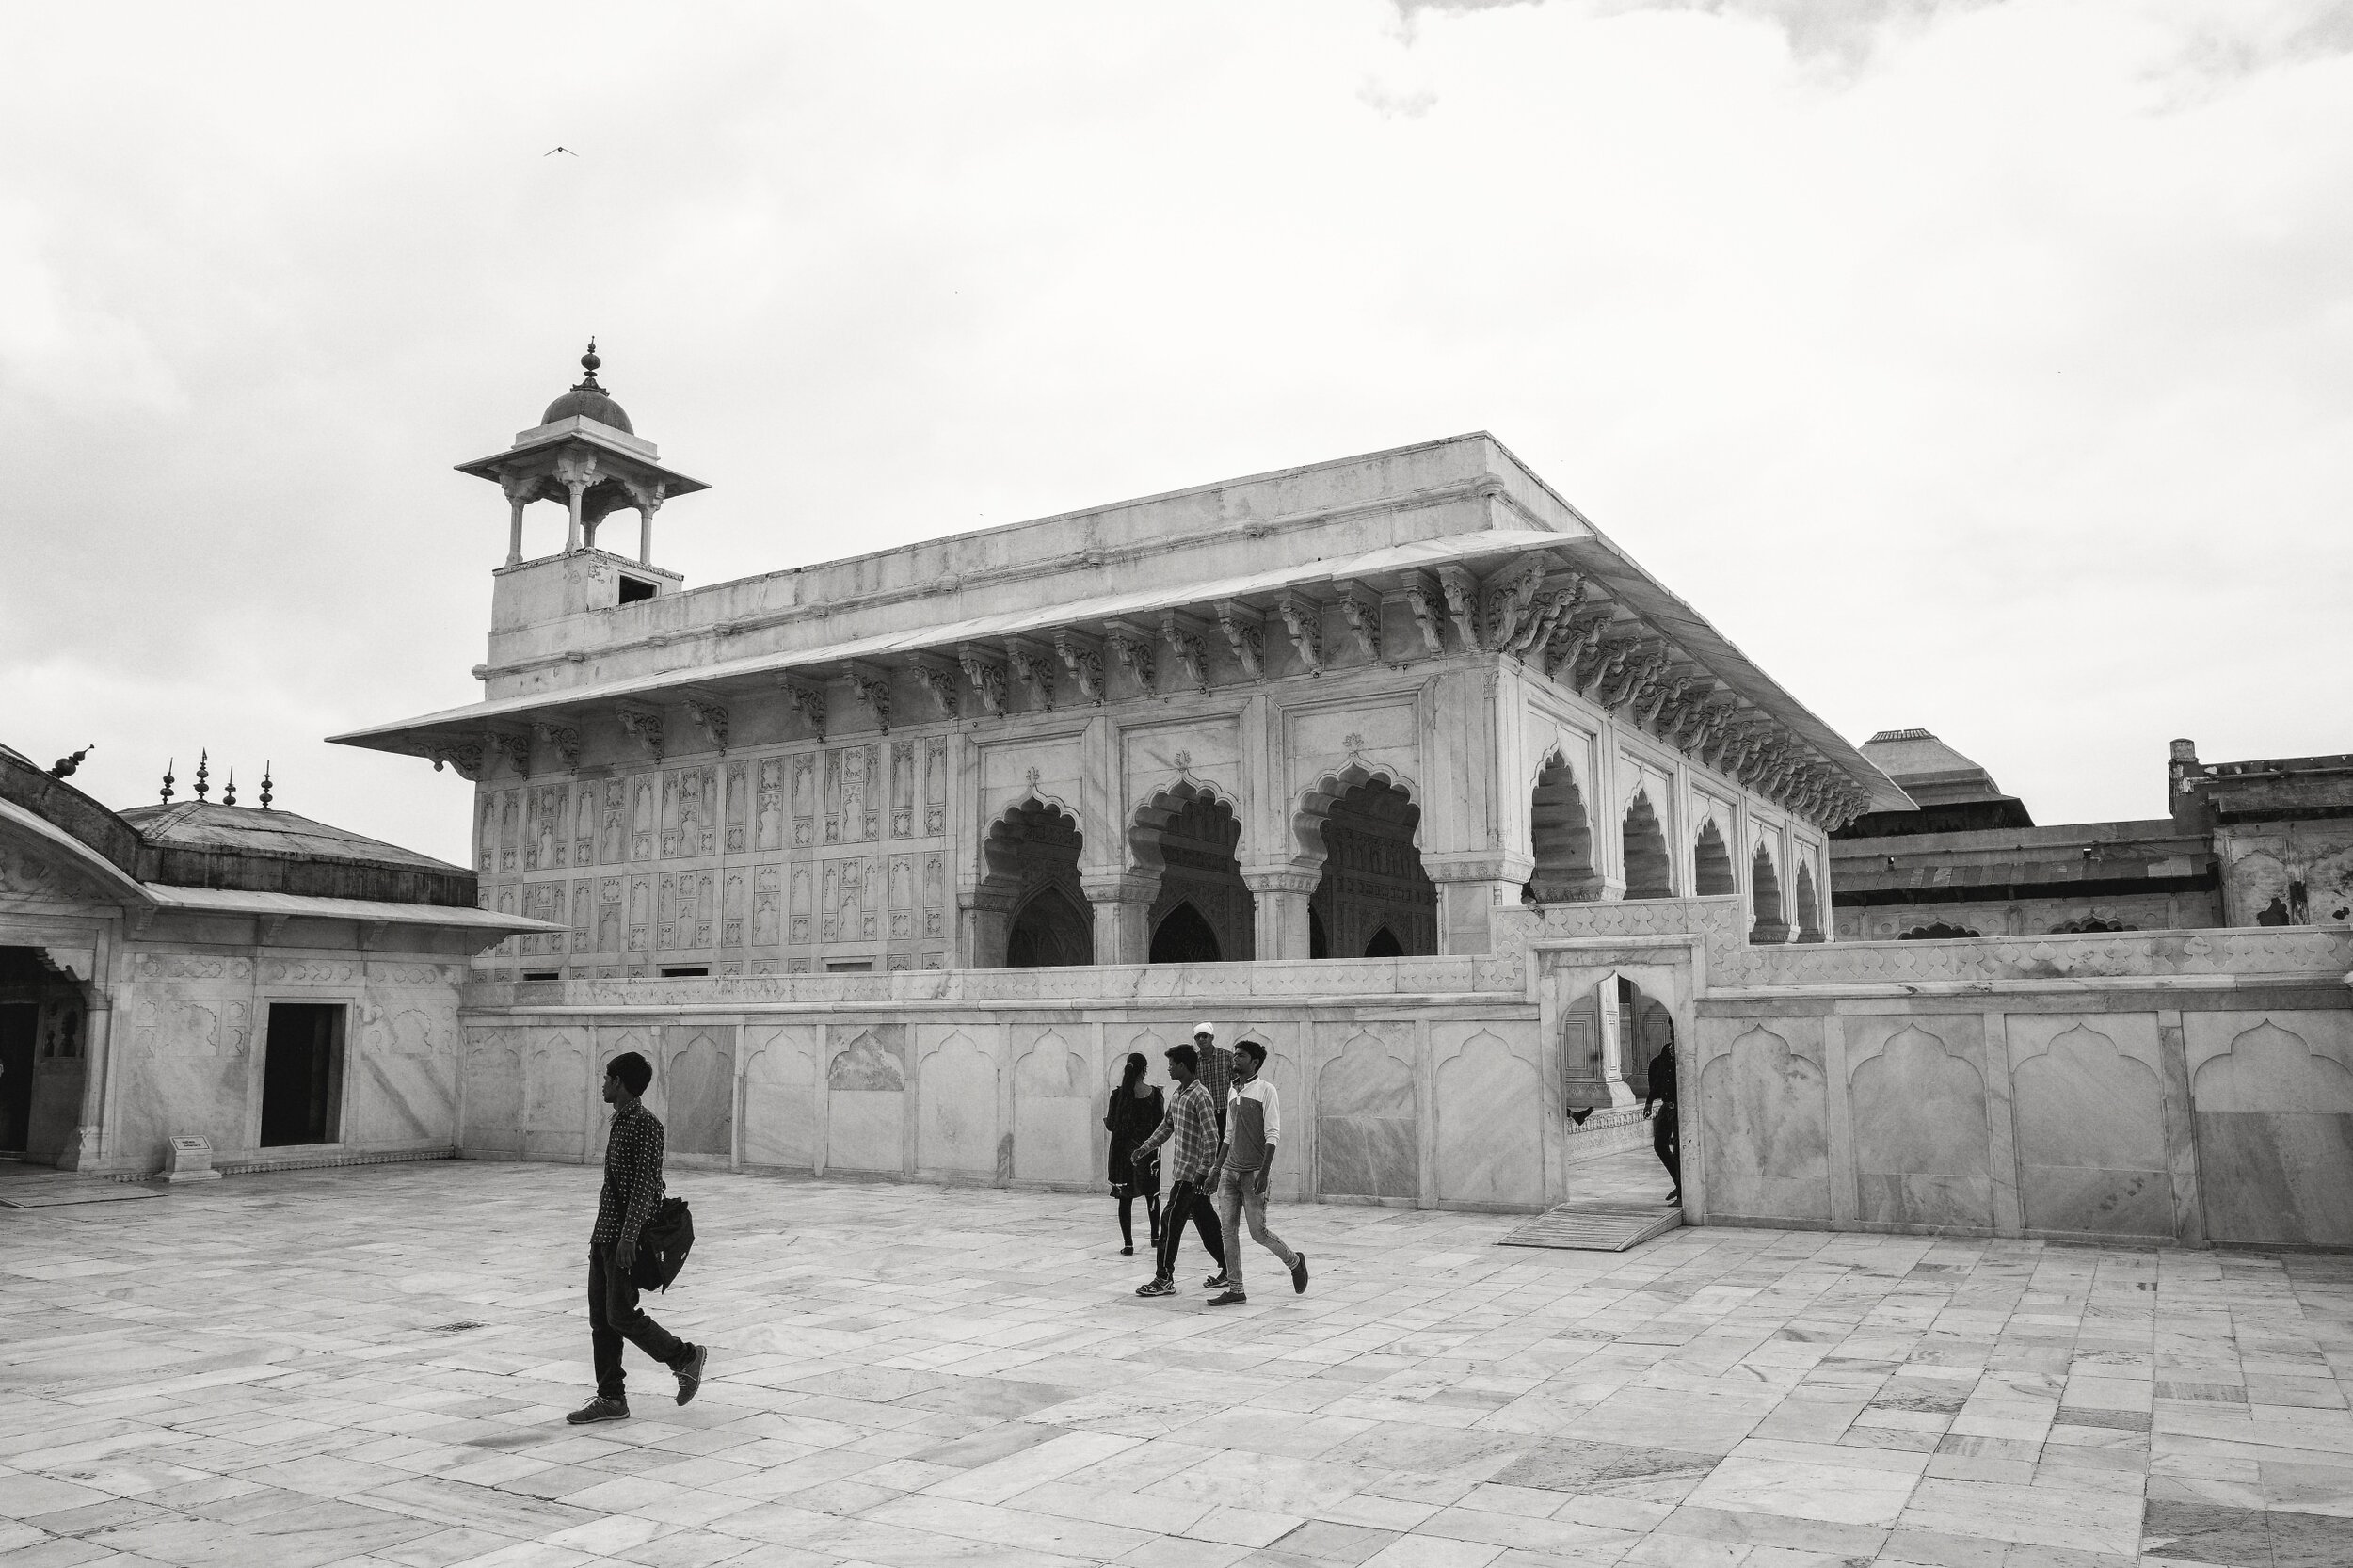  Khas Mahal, Agra Fort, Agra 